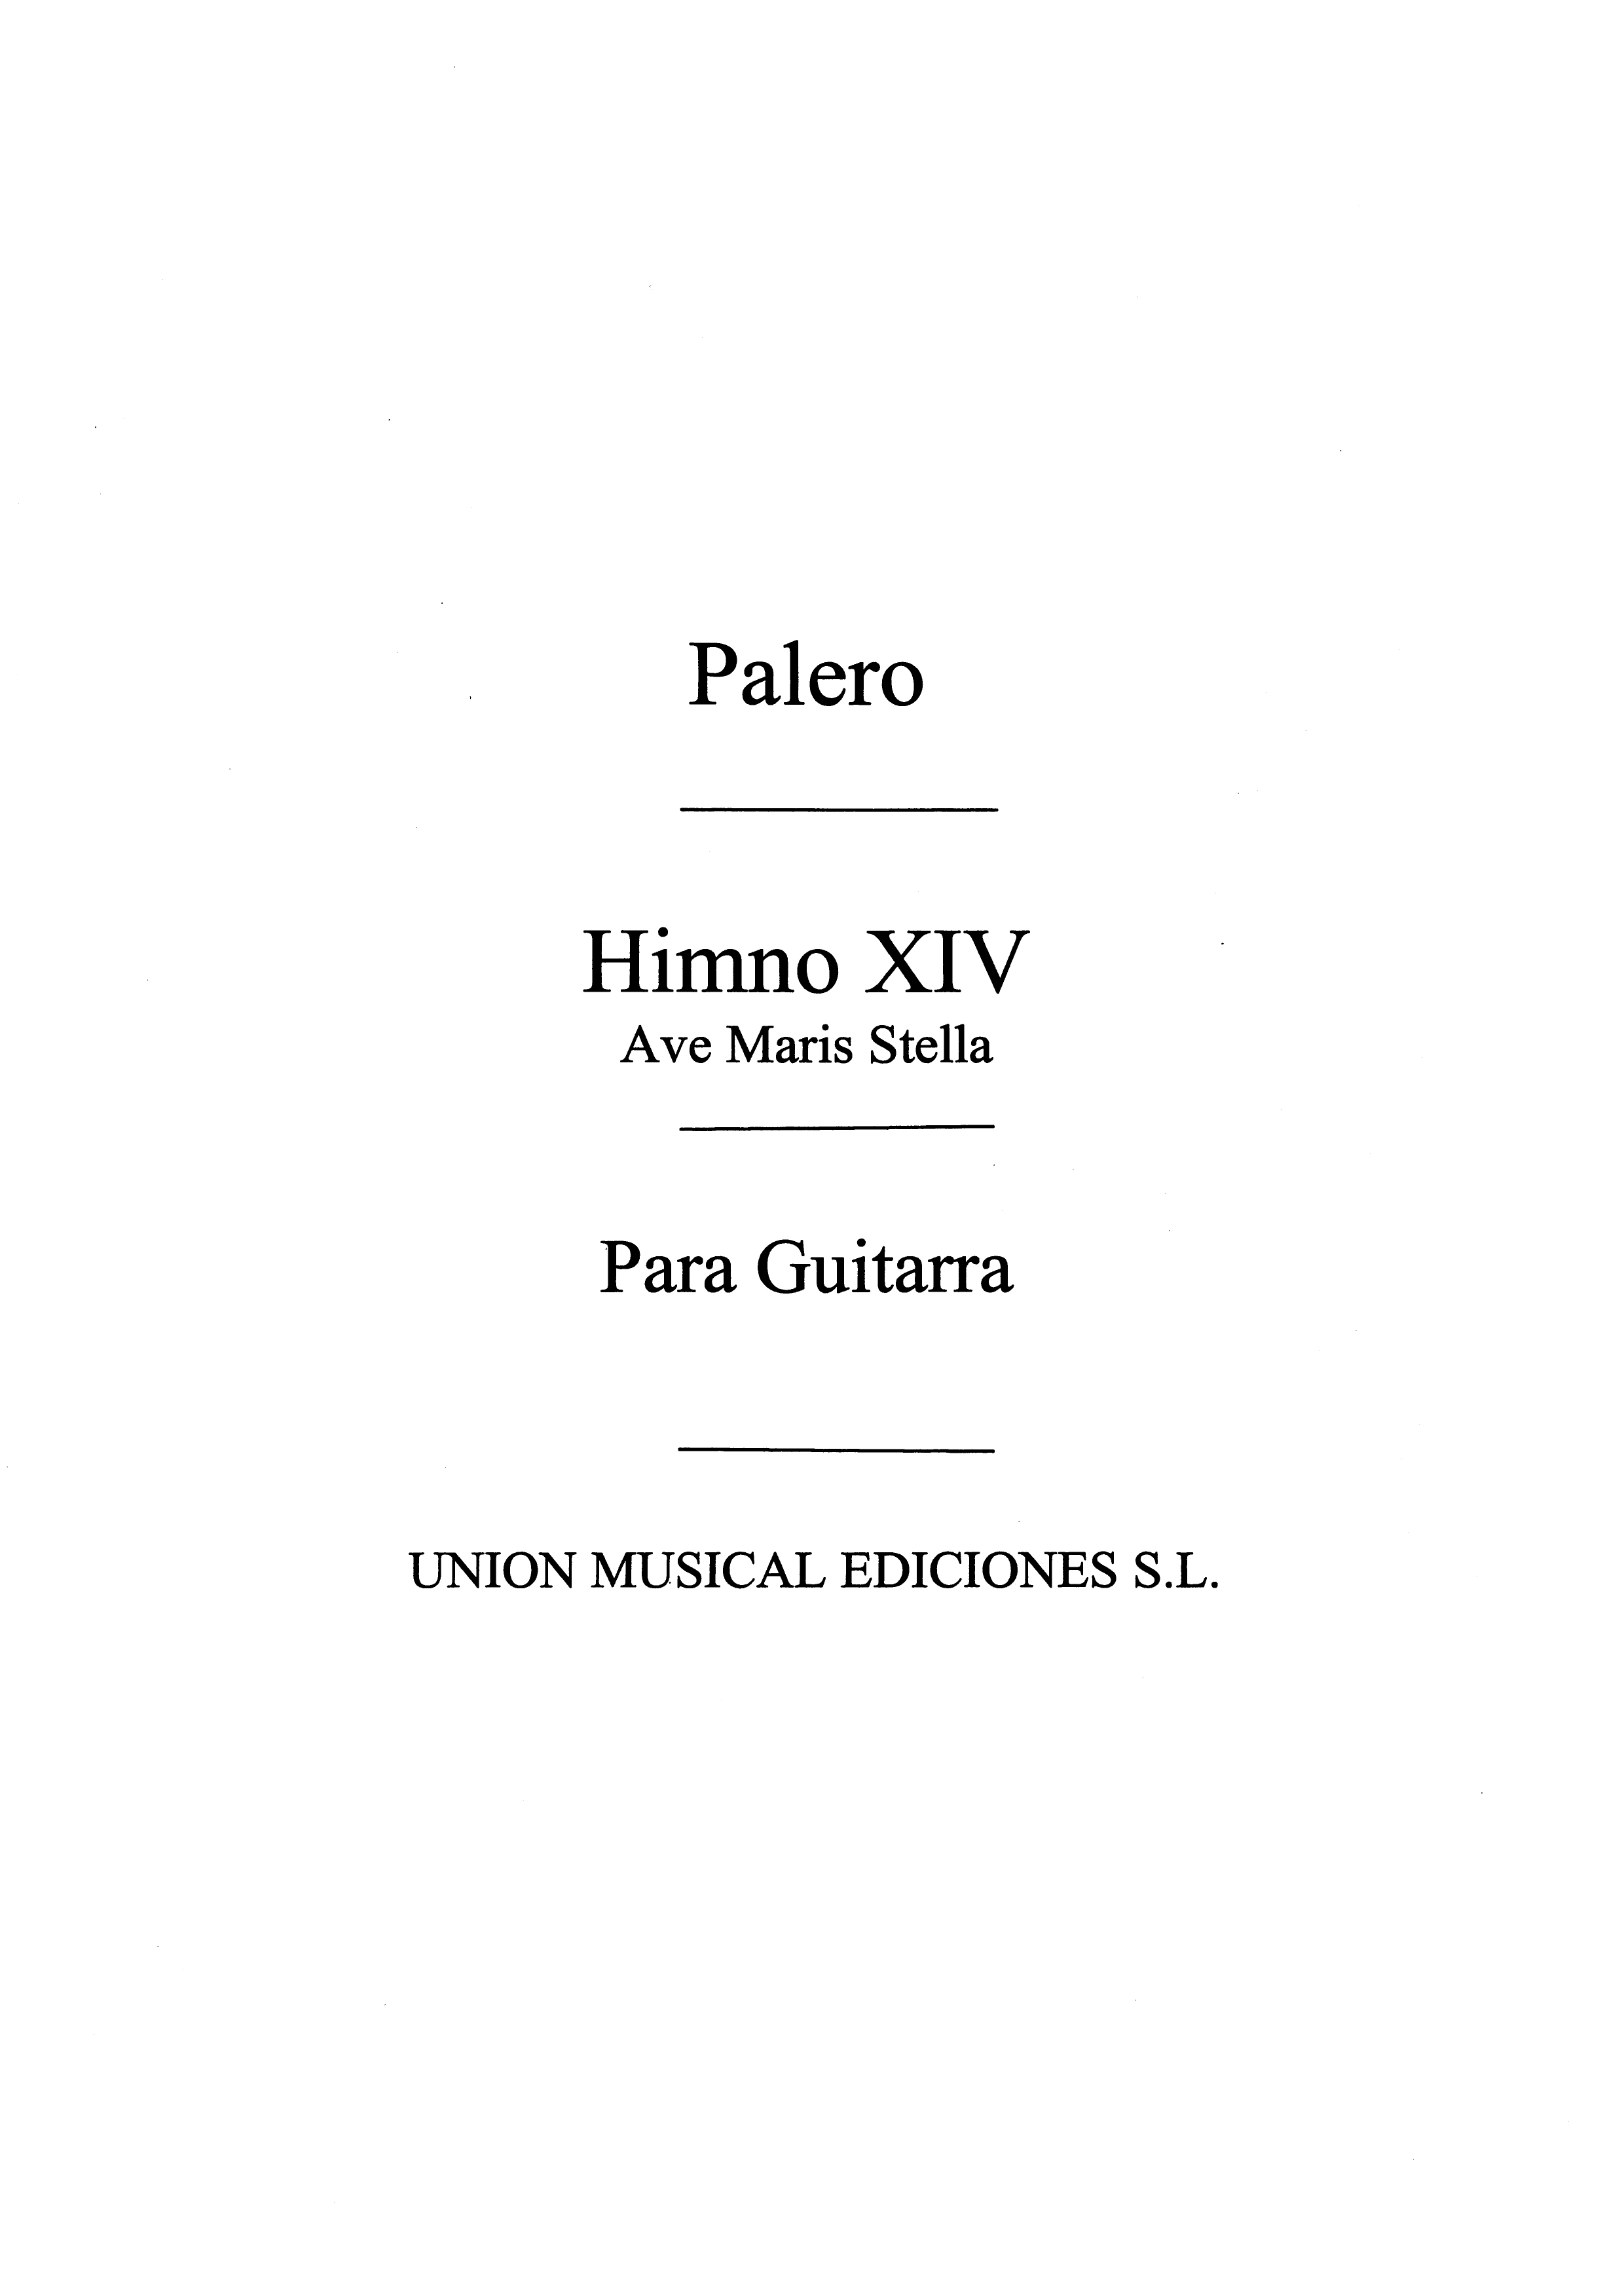 Palero: Himno XIV Ave Maris Stella (Tarrago): Guitar: Instrumental Work